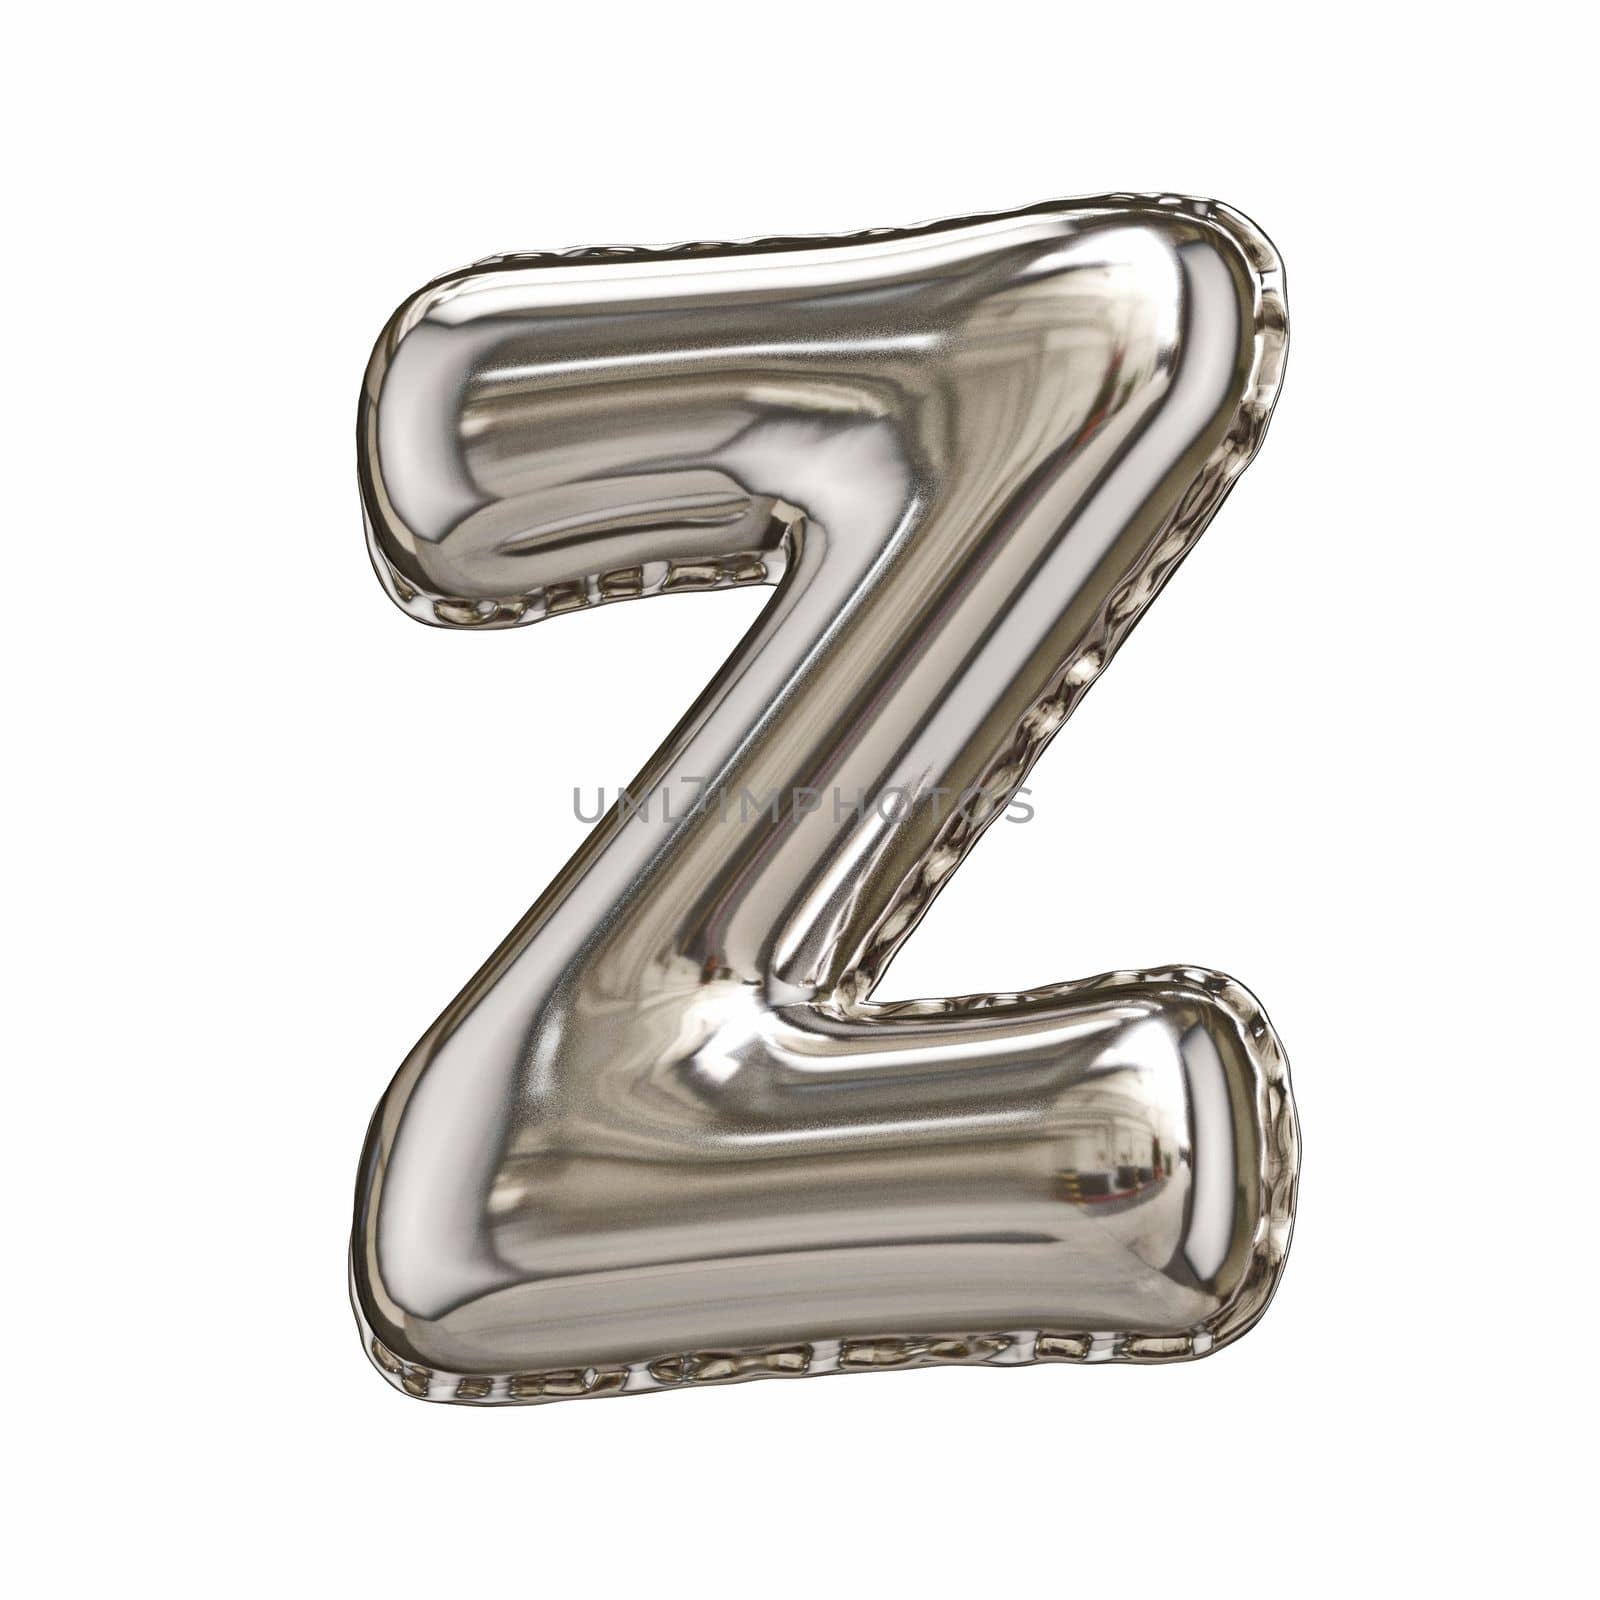 Silver foil balloon font letter Z 3D rendering illustration isolated on white background